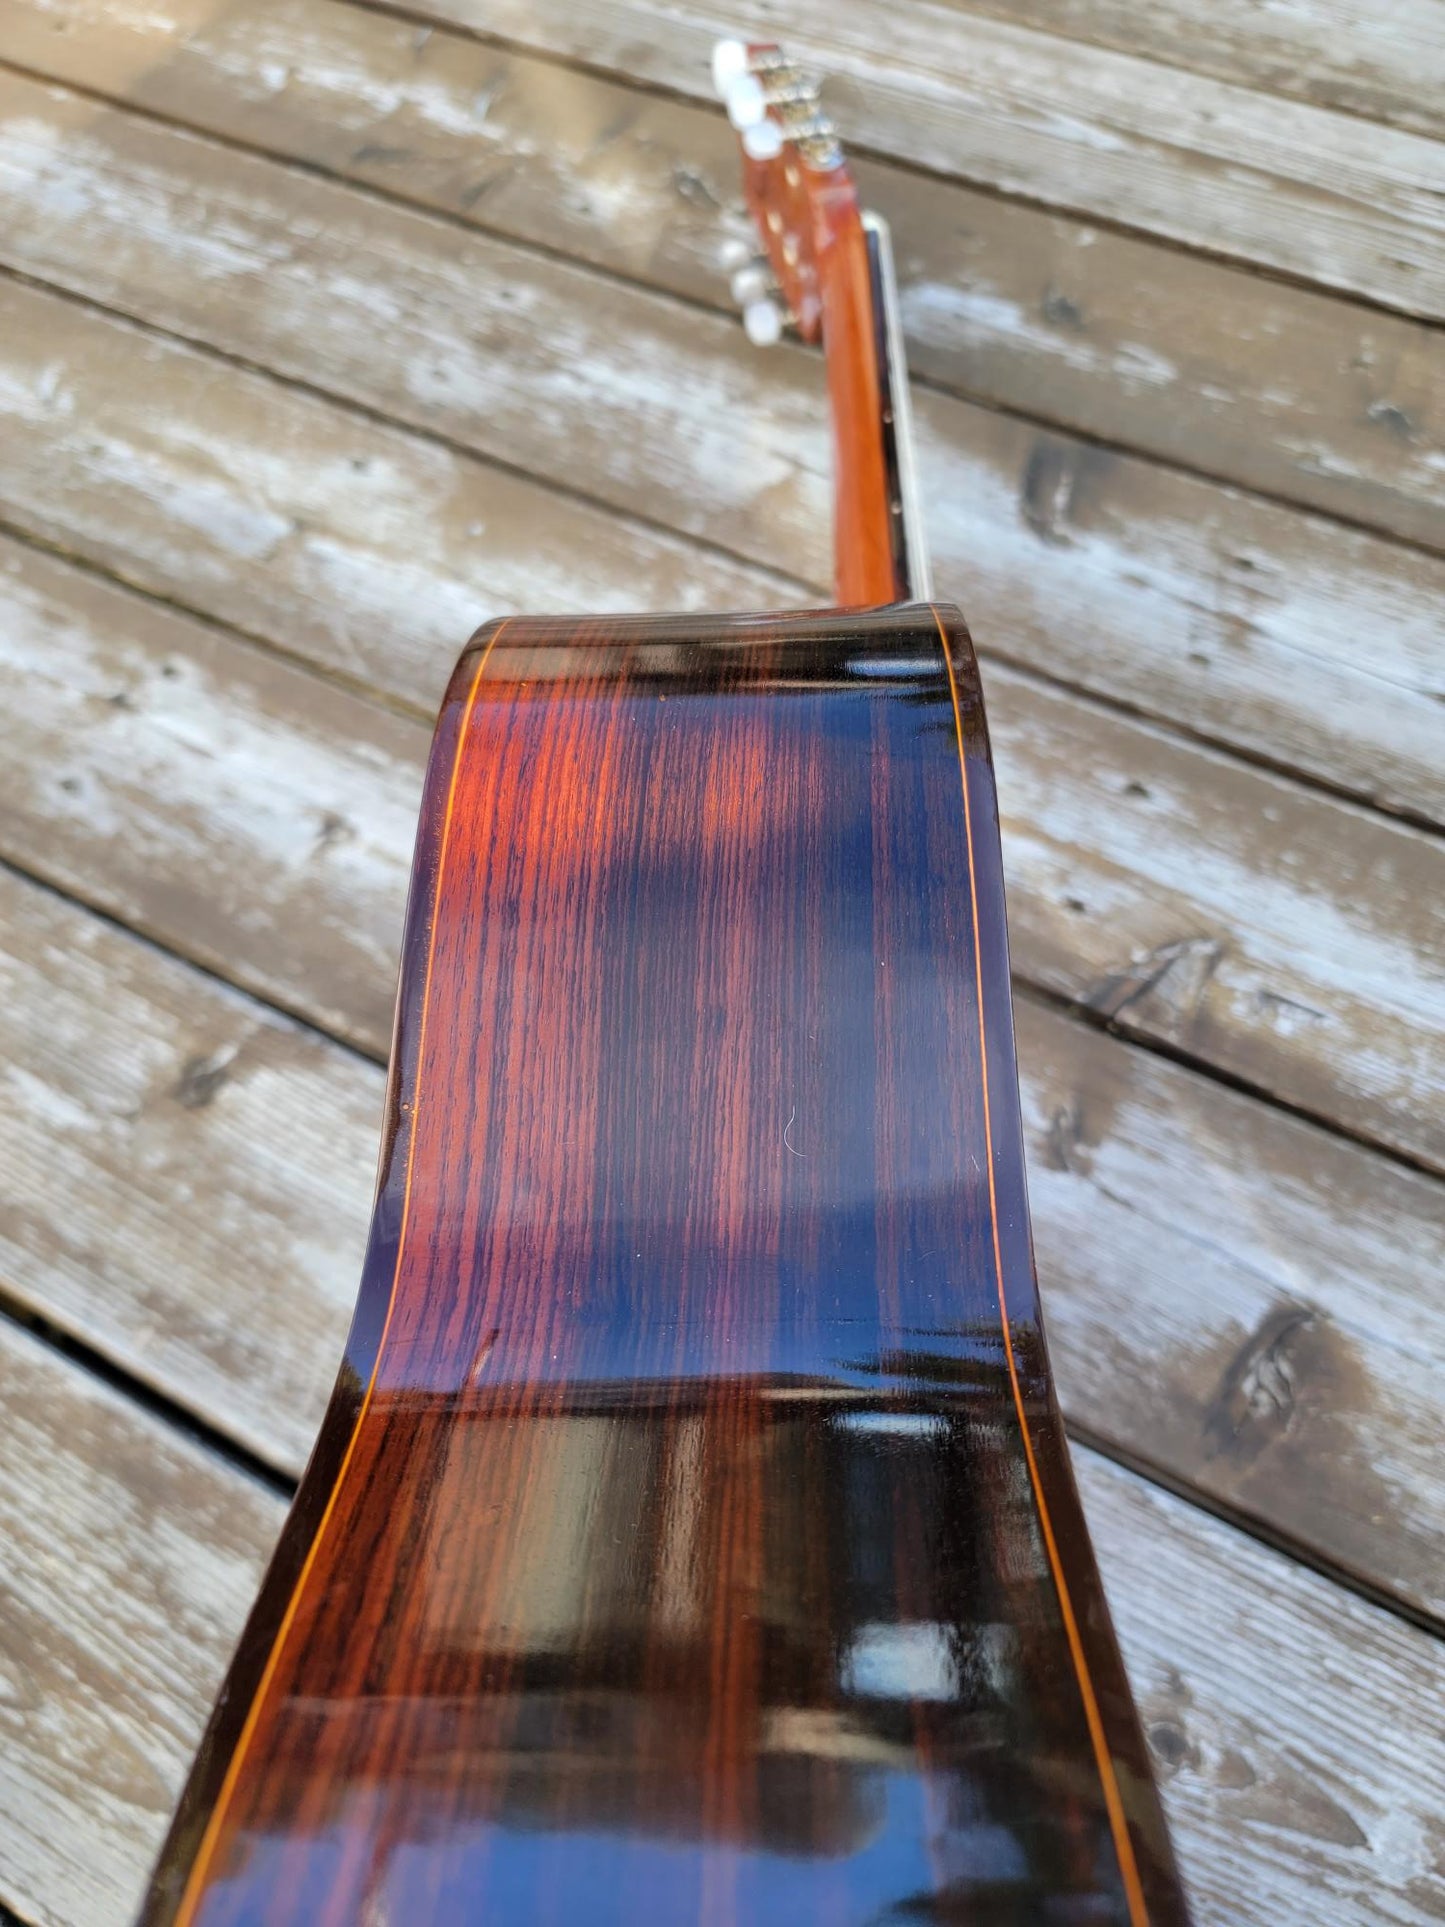 Yasuo Abe Gut Guitar 65C by Zenon